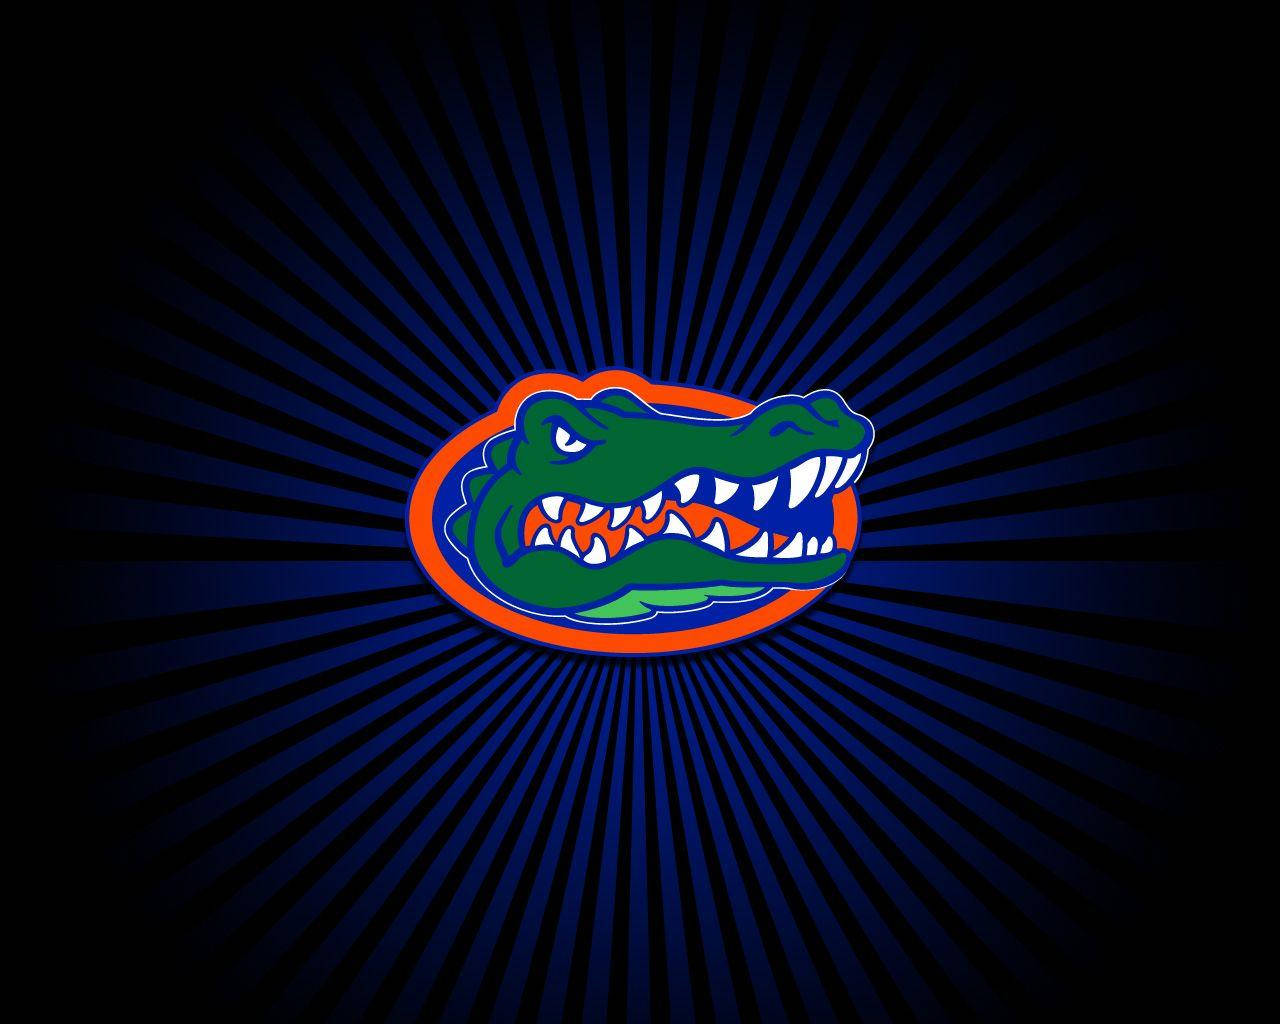 University Of Florida Gators With Rays Wallpaper